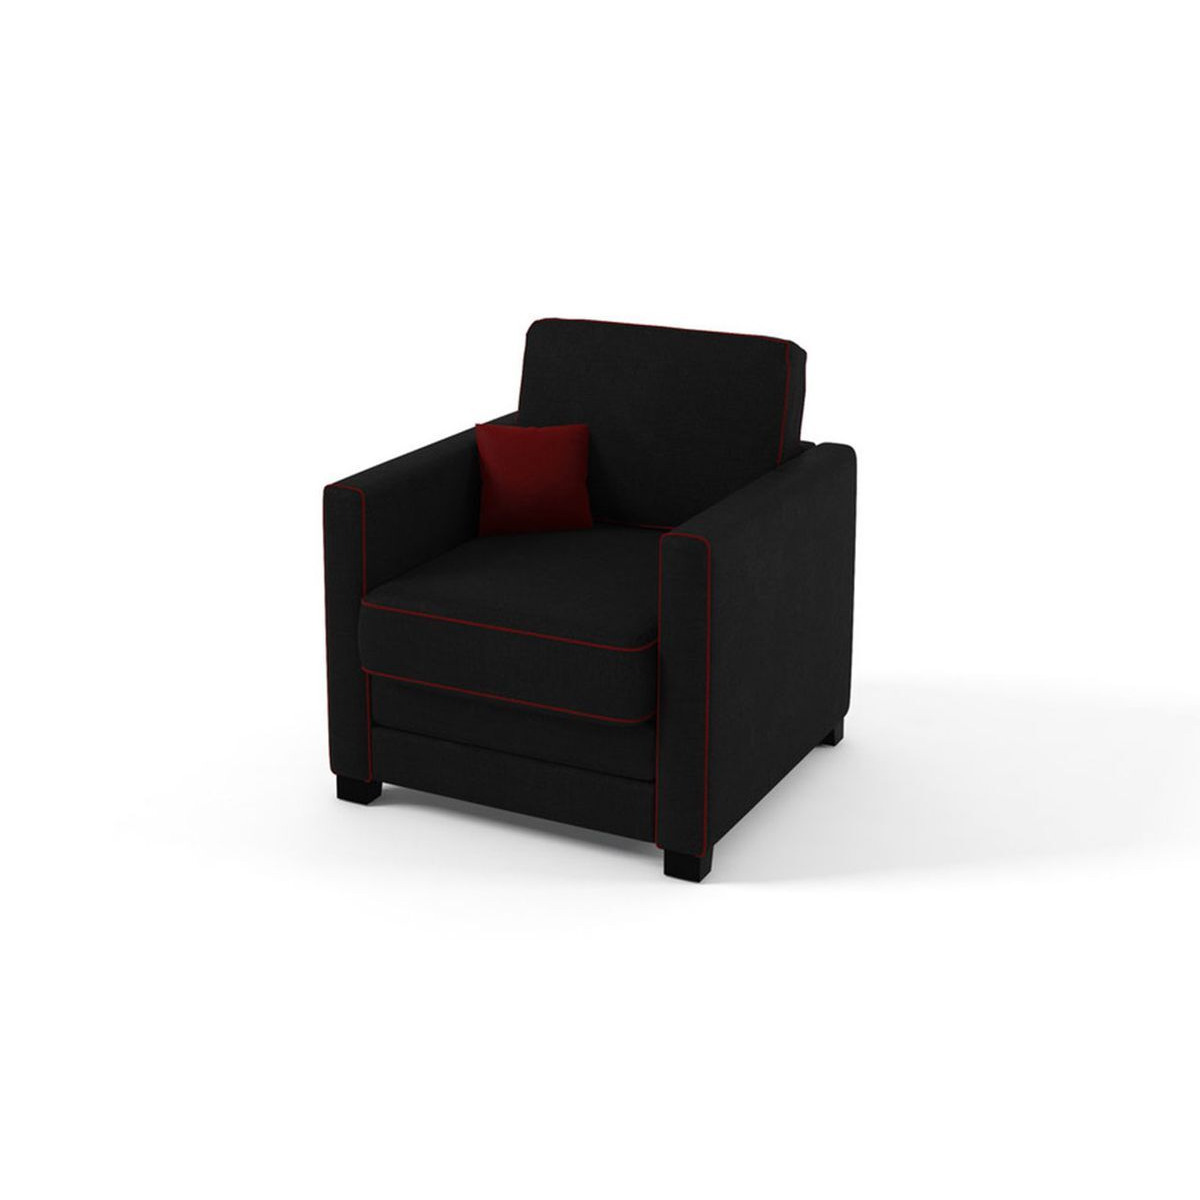 Boom Chair Sofa Bed, black, burgundy - image 1